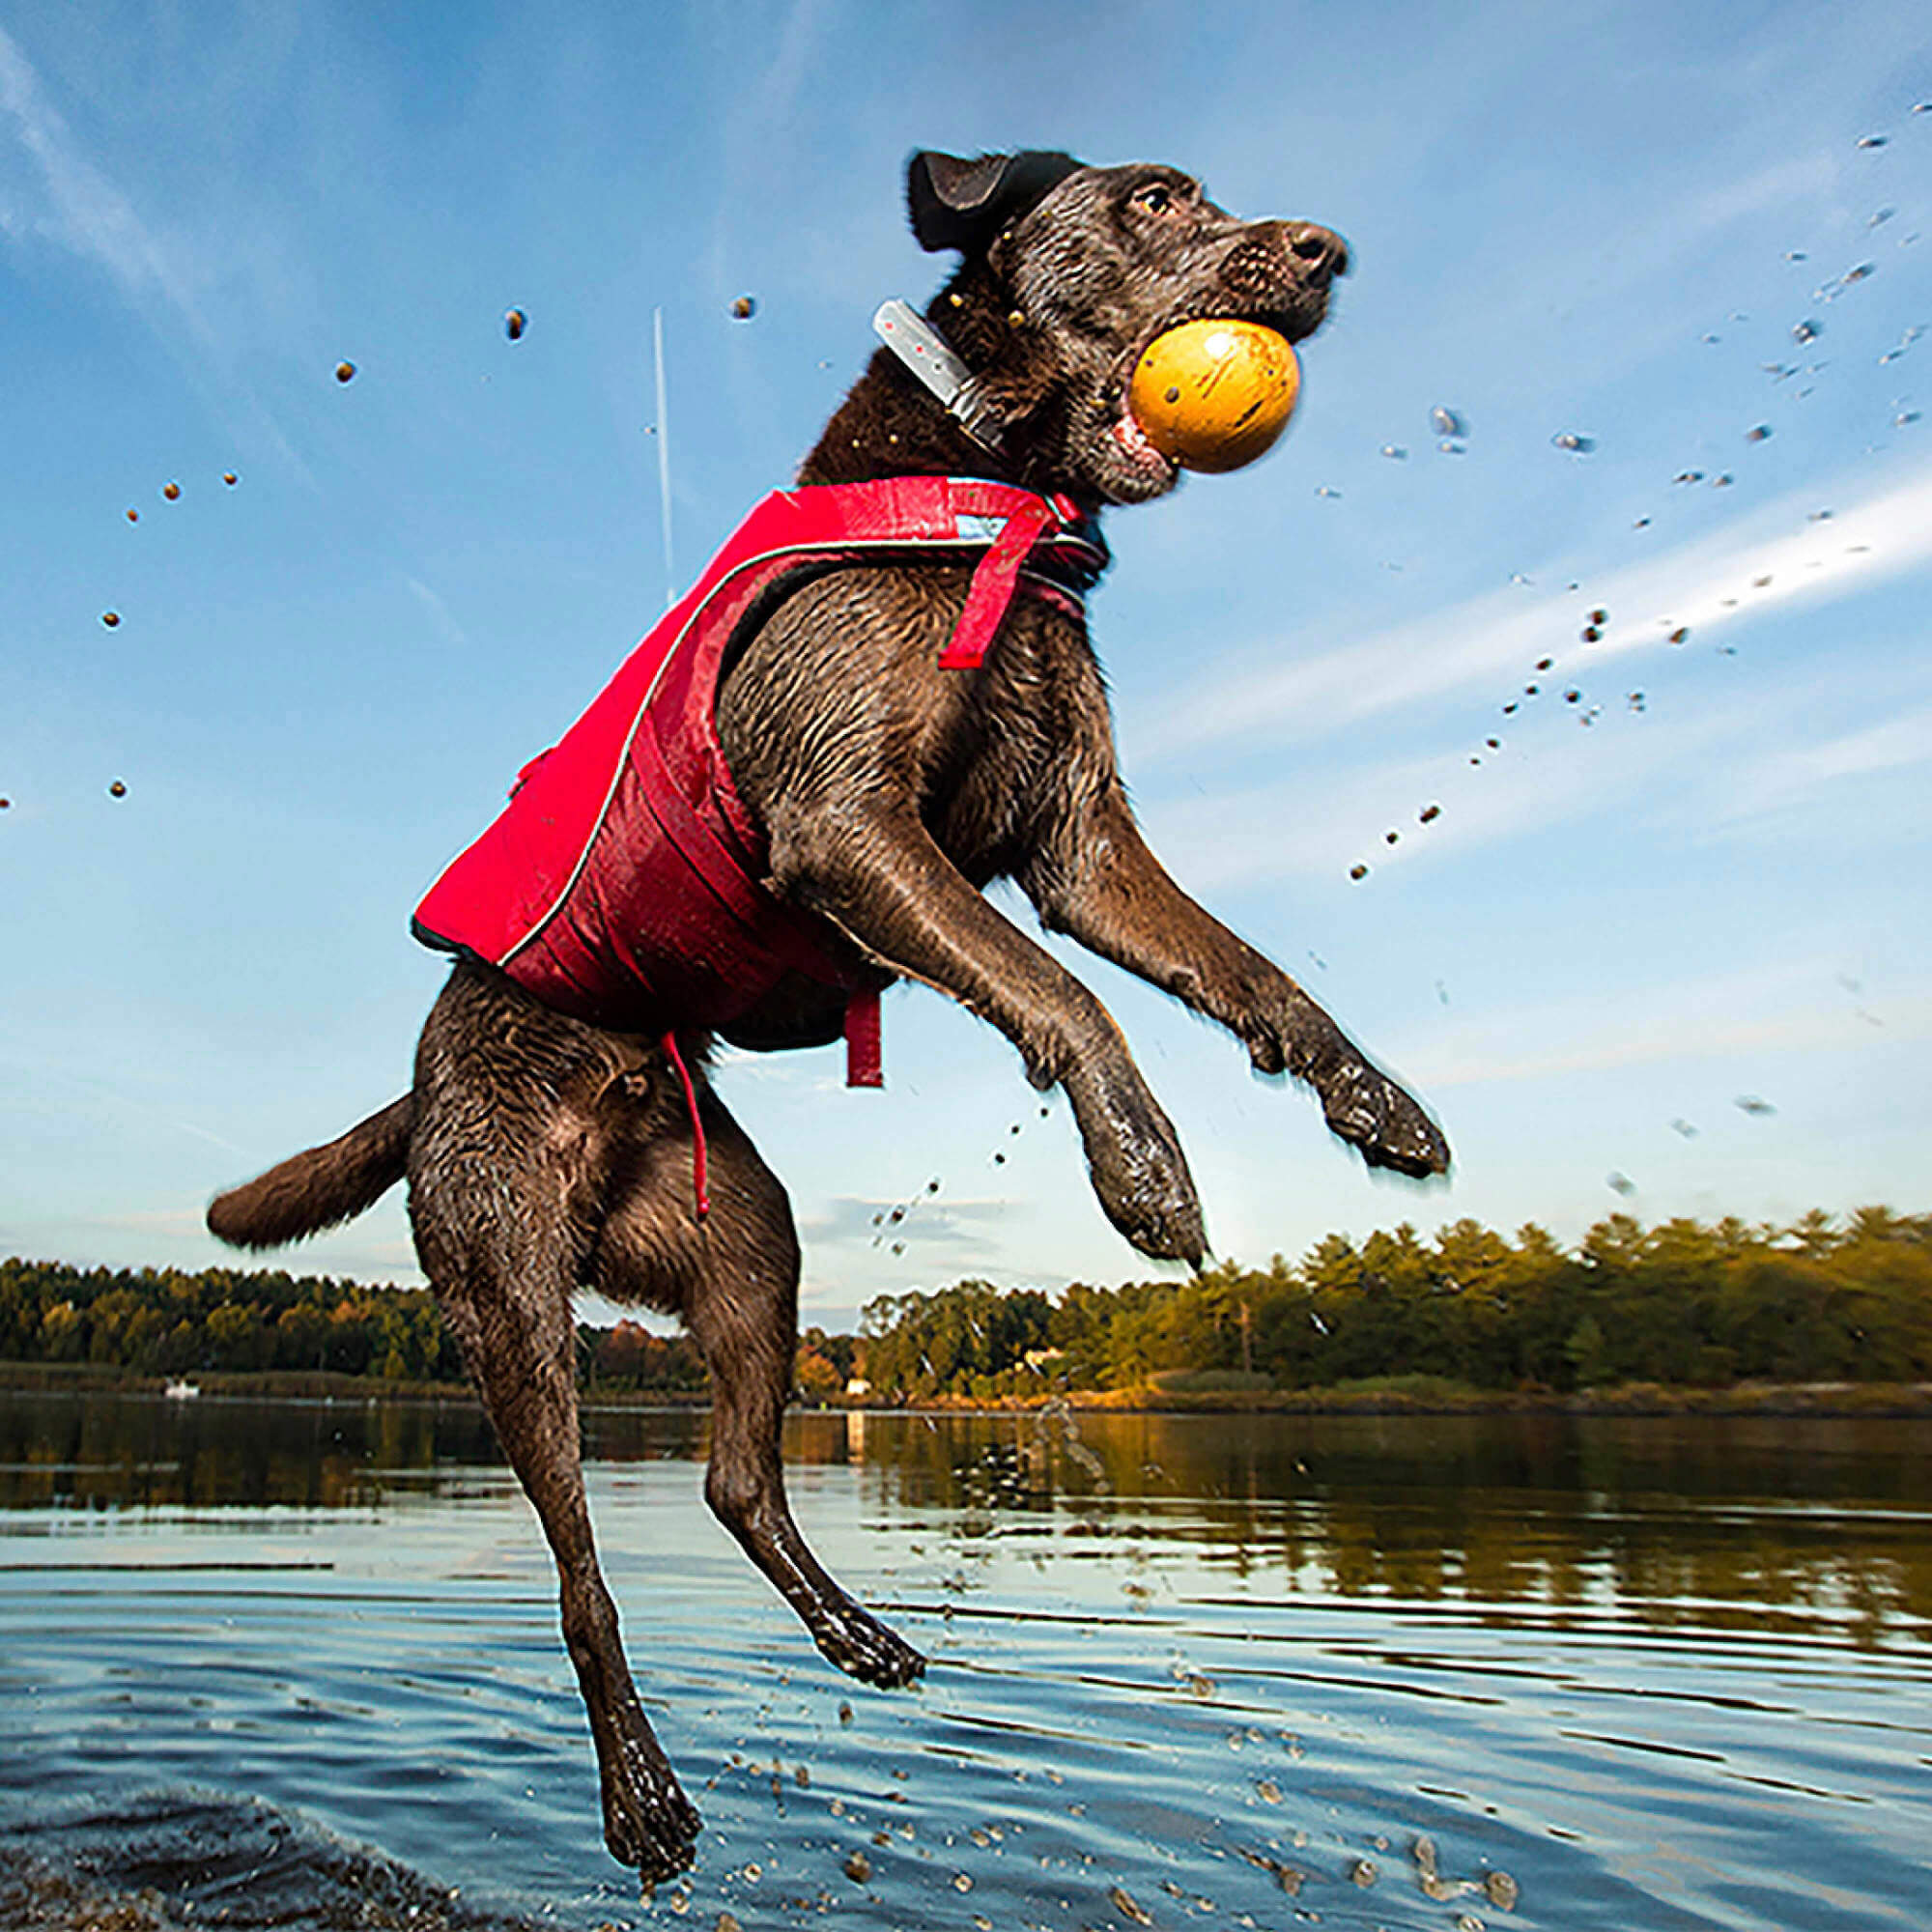 Dog catching a ball outside wearing the kurgo surf n turf dog life jacket